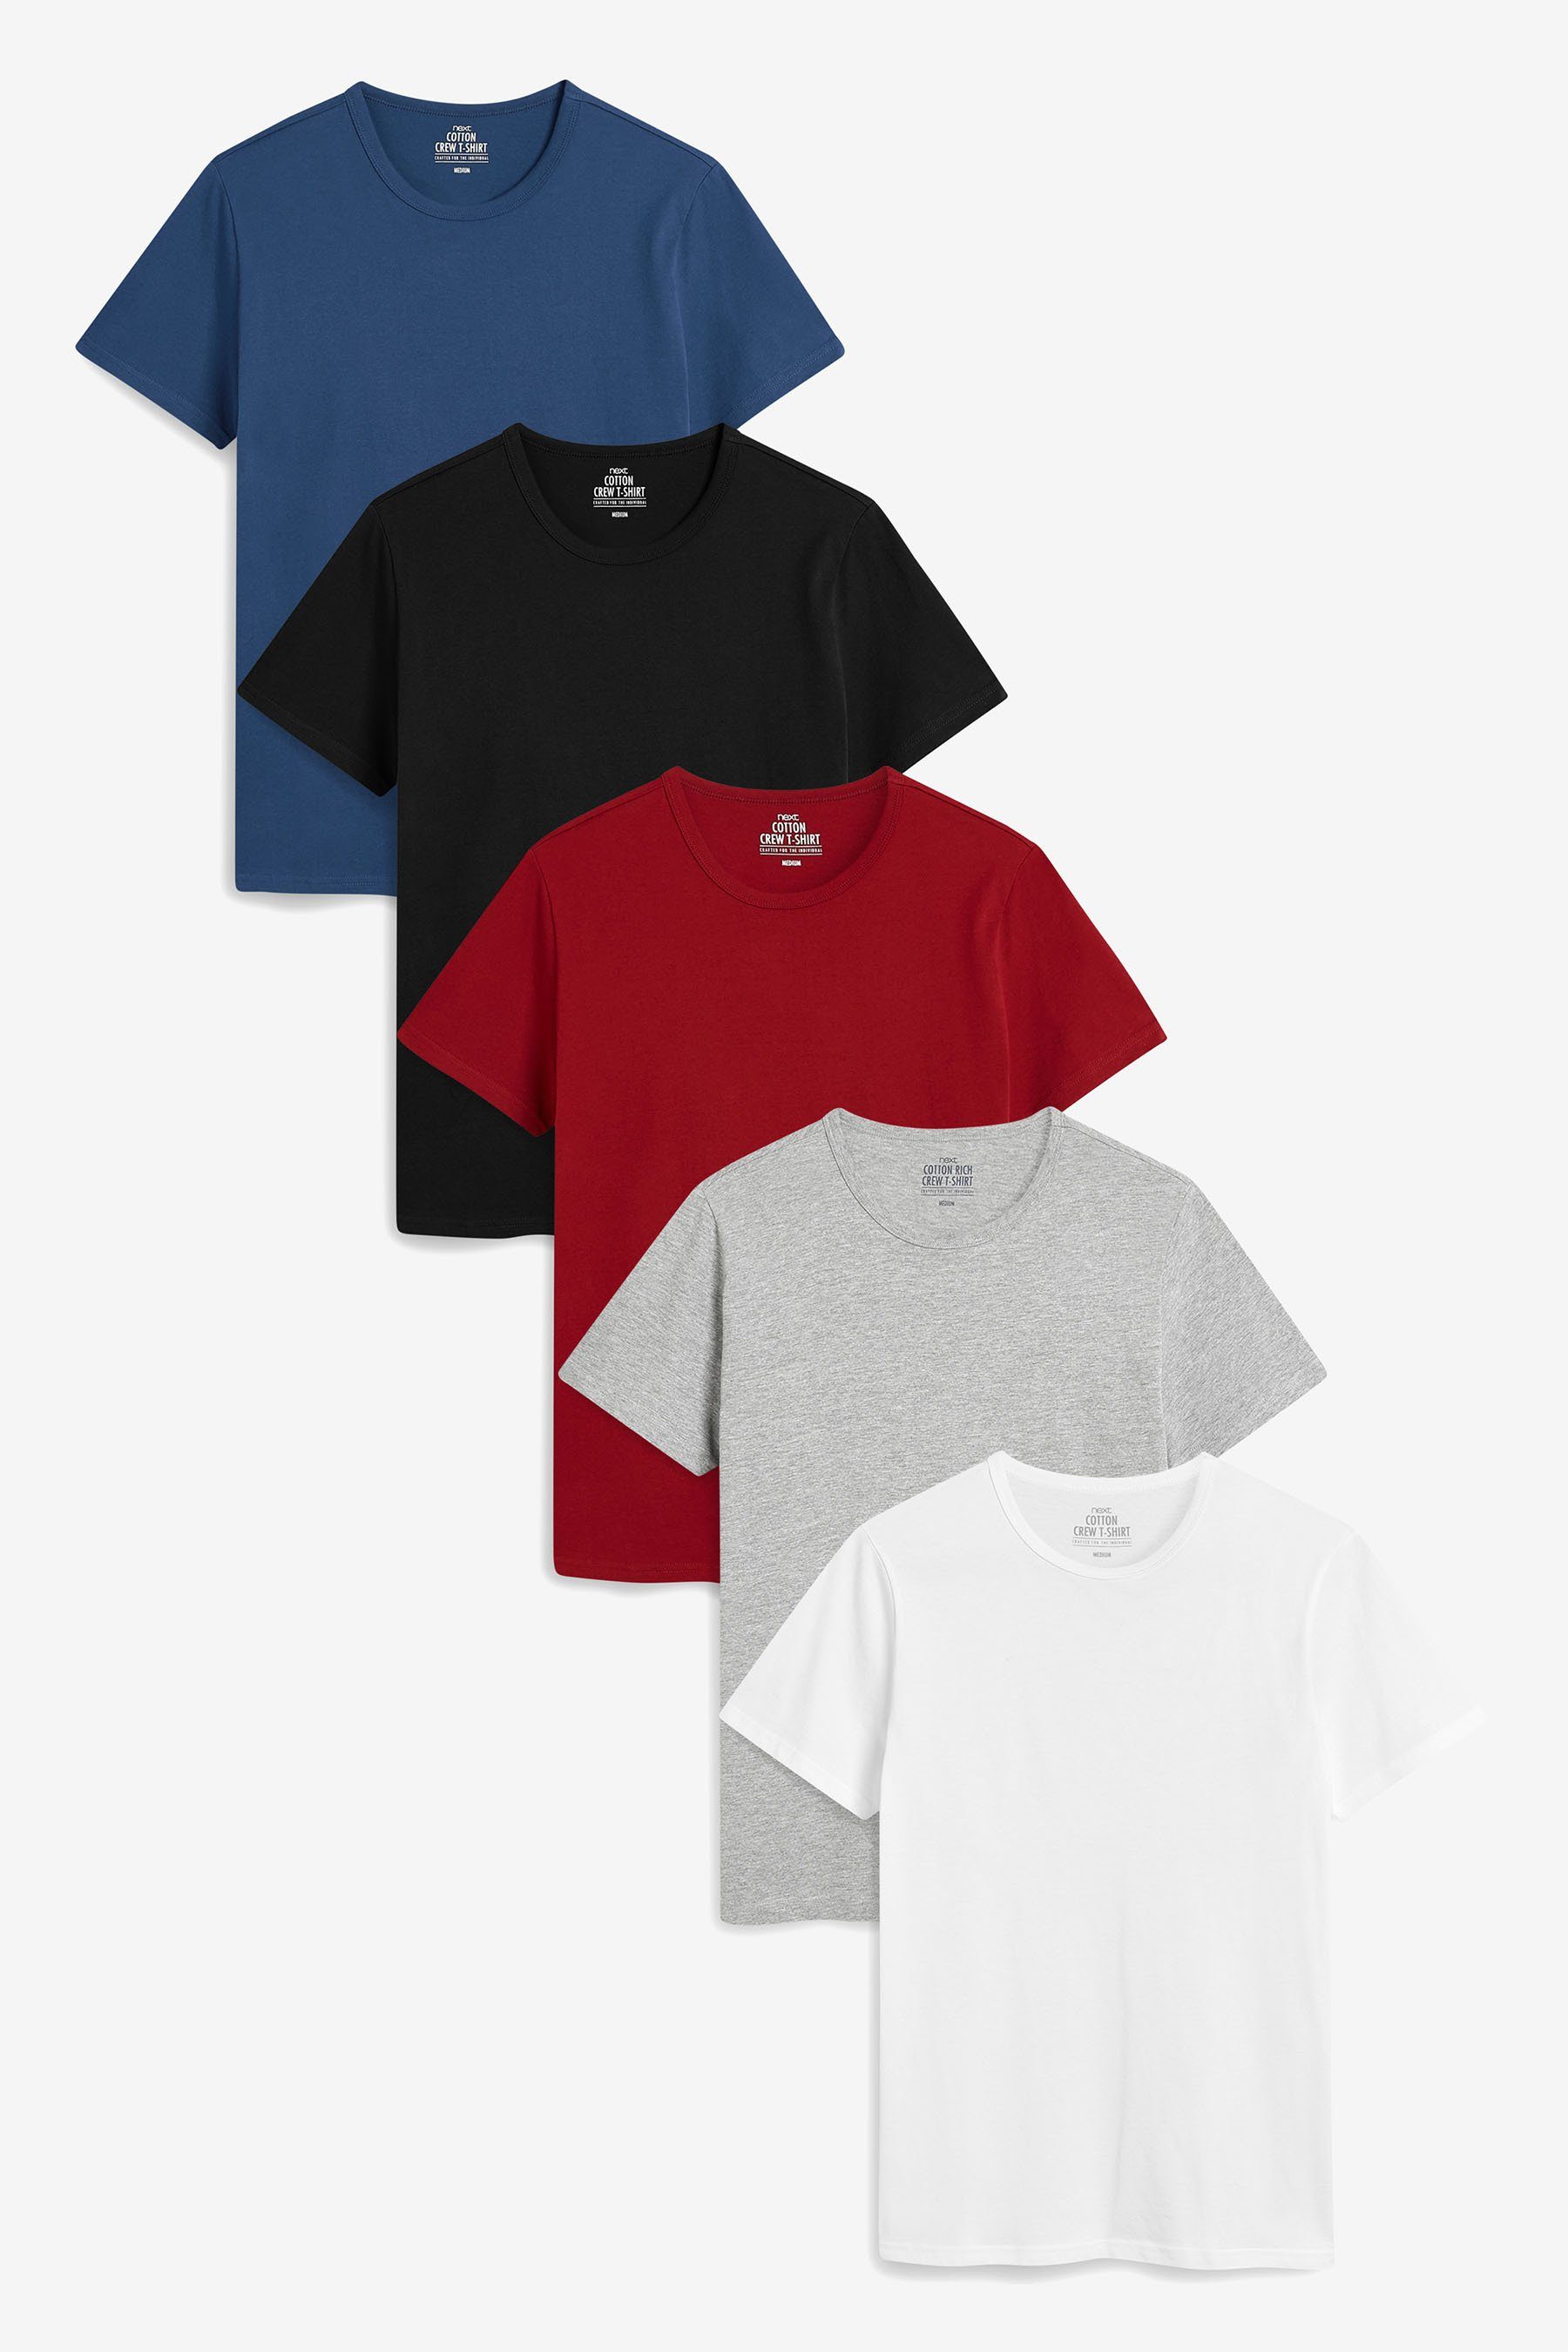 Red/Black/White/Blue/Grey T-Shirts Marl Burgundy (5-St) Next 5er-Pack Unterhemd